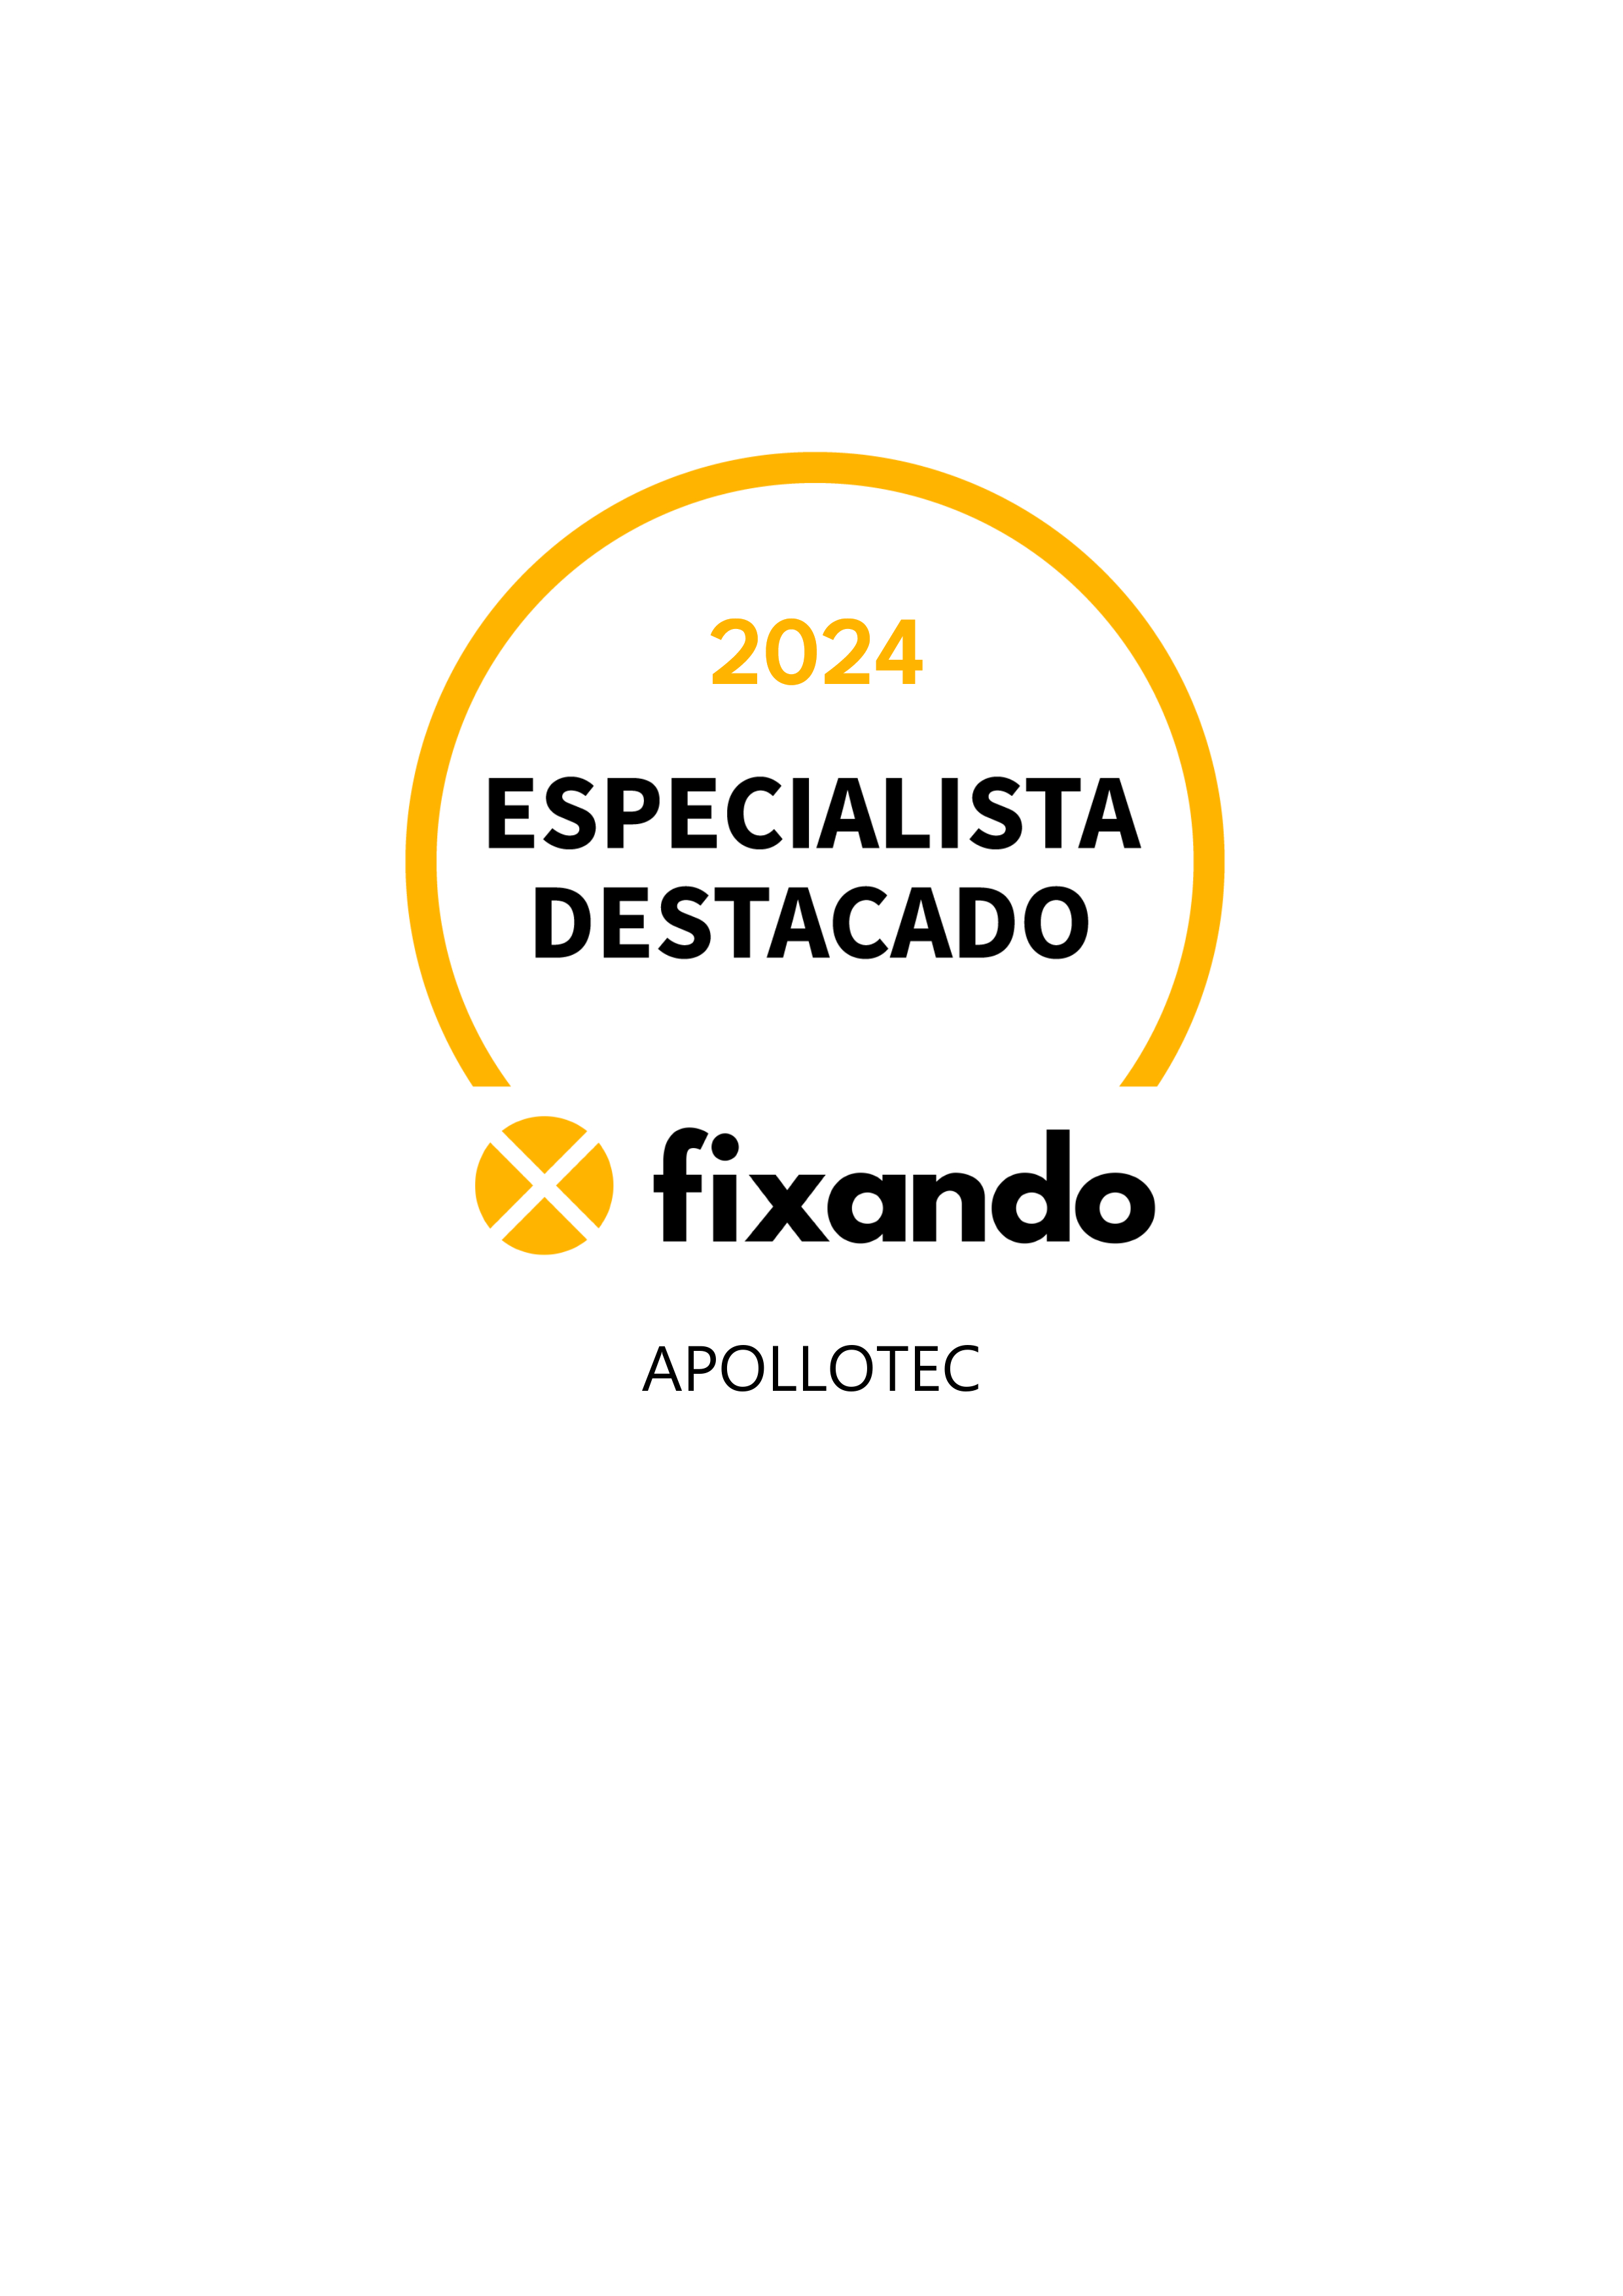 Apollotec - Figueiró dos Vinhos - Design de Logotipos